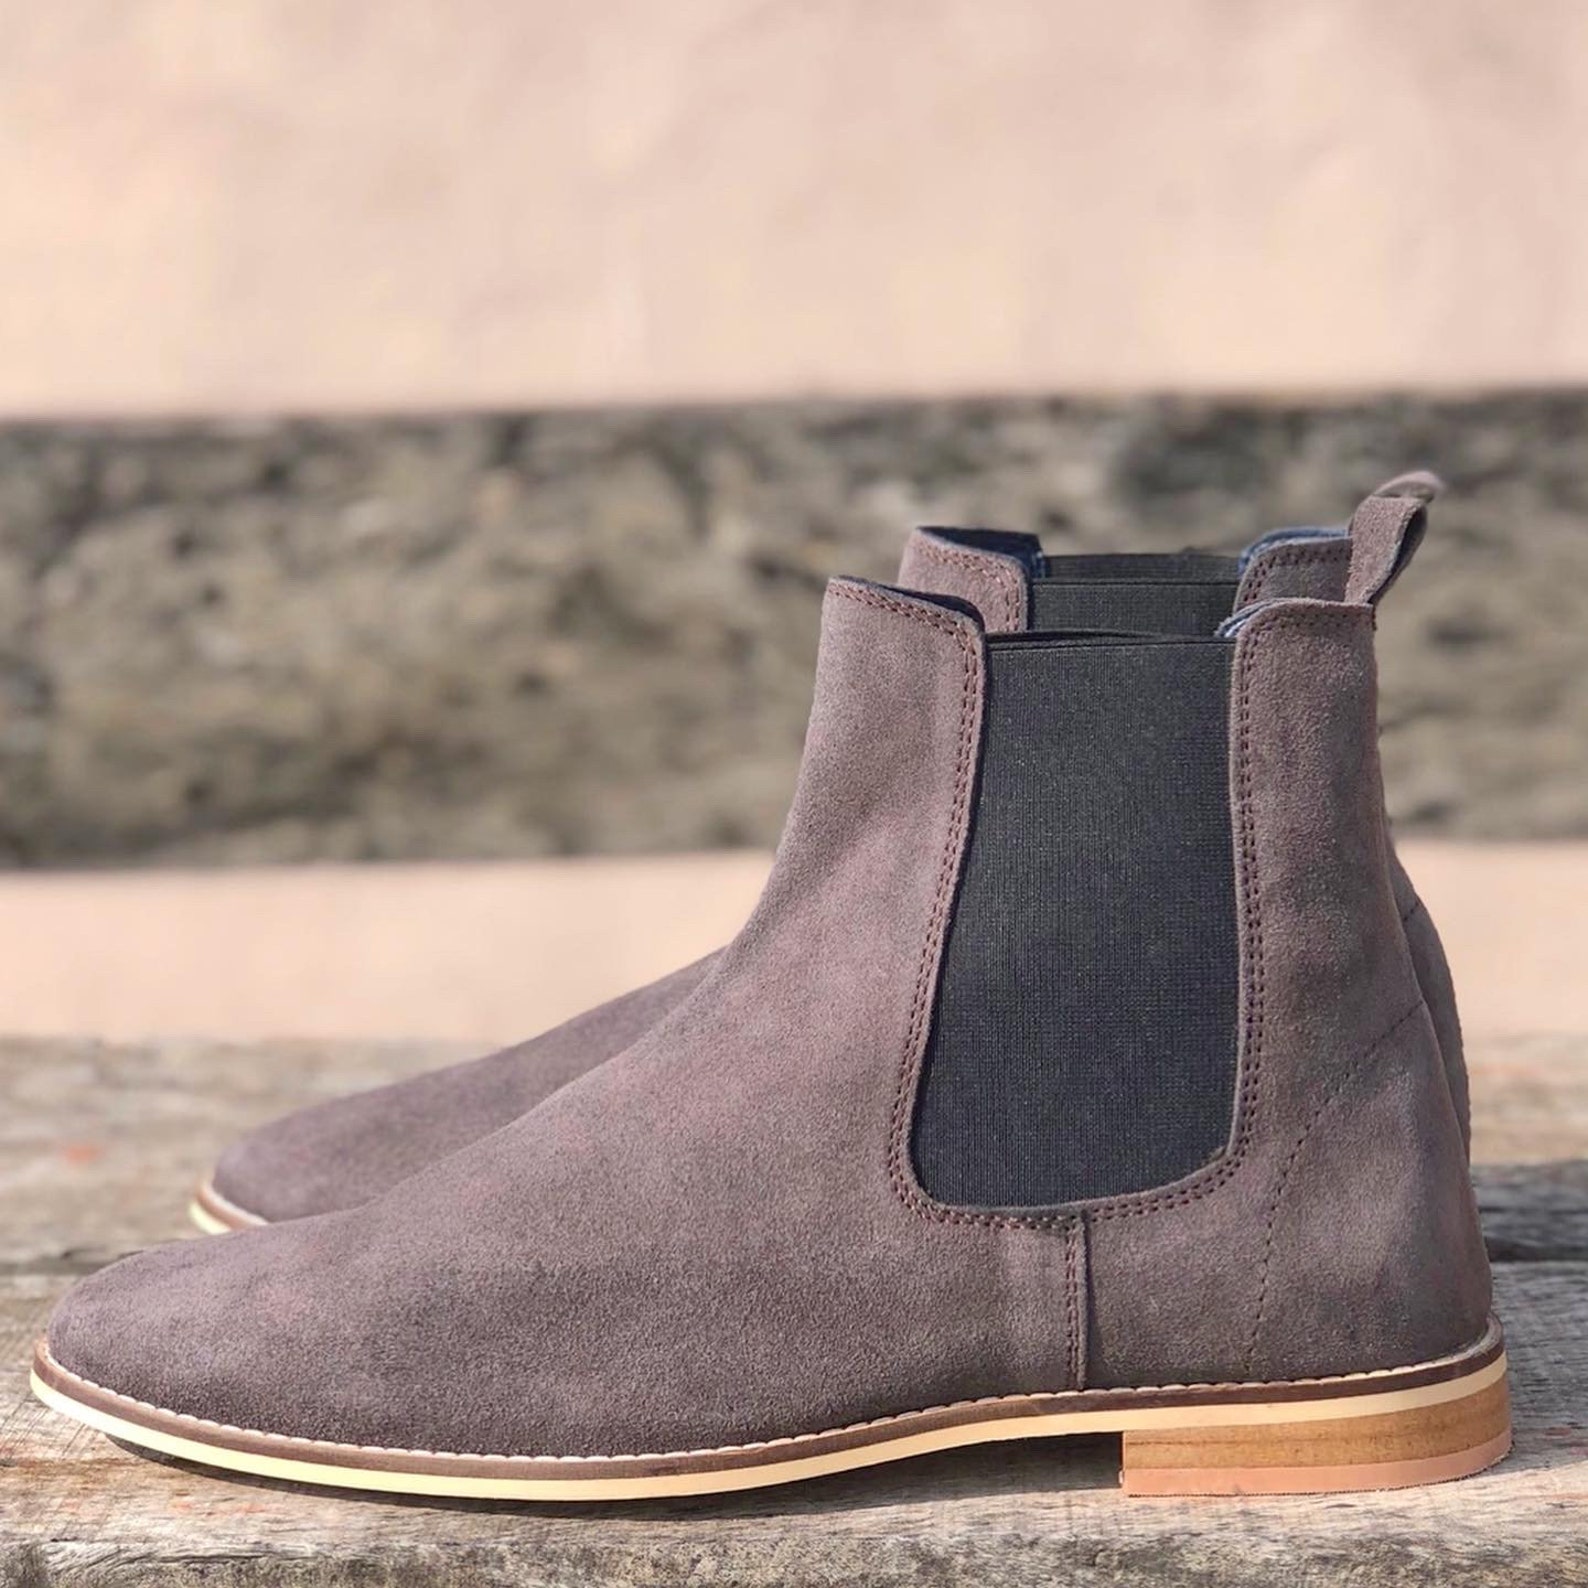 All Color Matte BS Boots Chelsea New Arrivals Men Formal Shoes | Etsy